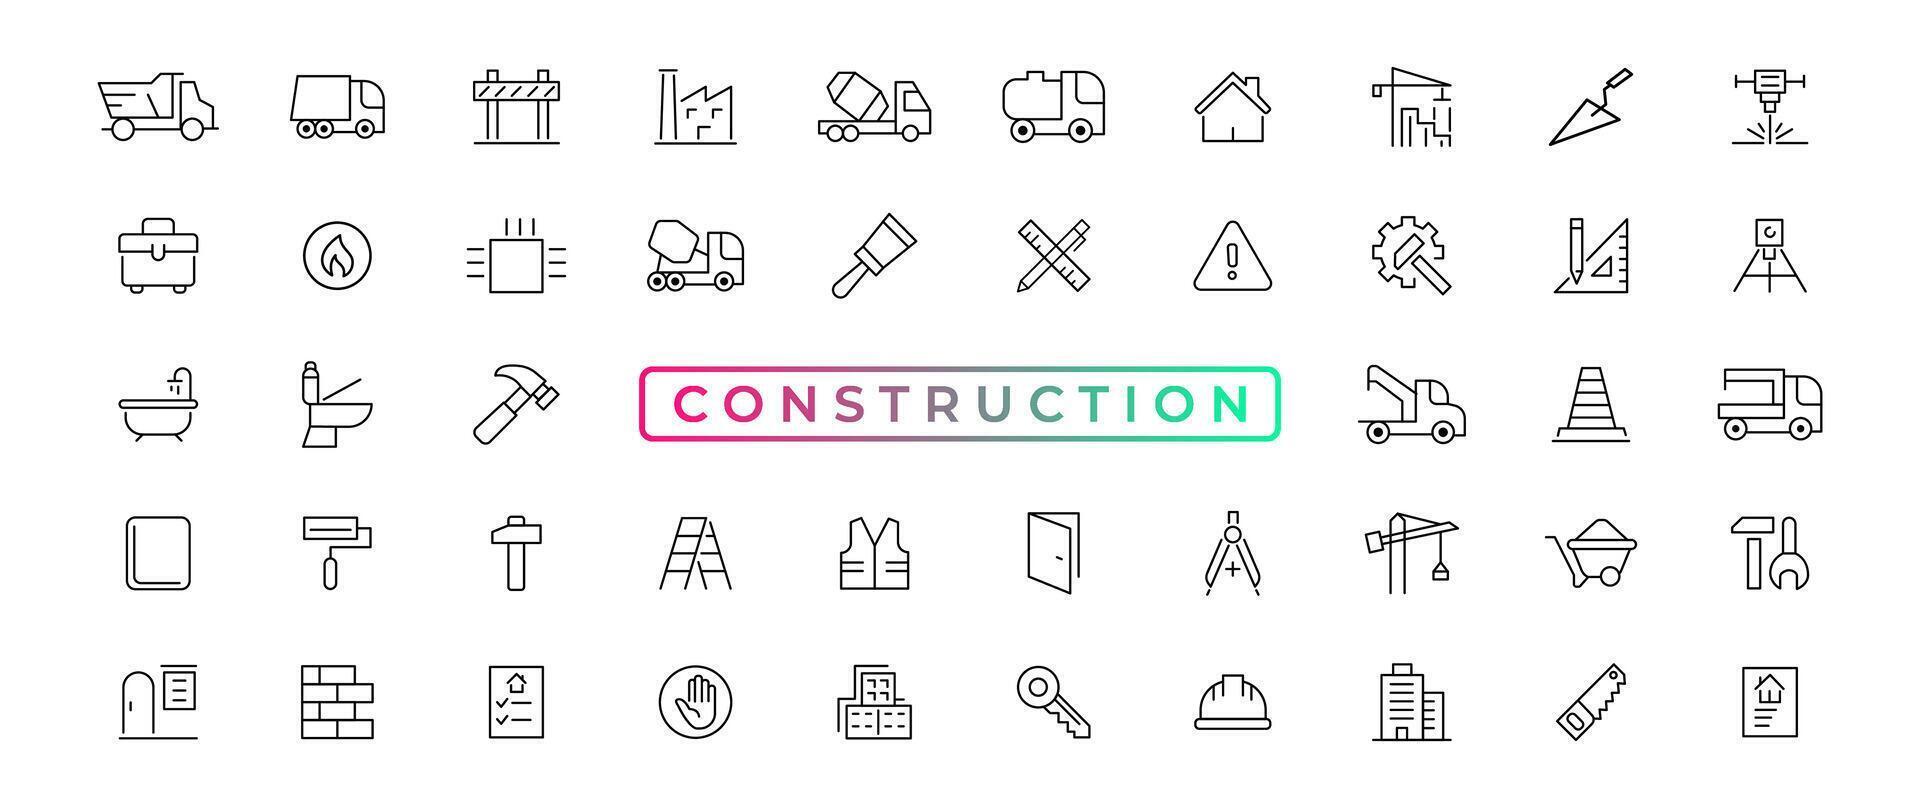 Construction line icons set. Home repair tools outline icons collection. Construction tools, builders and equipment symbols. Builder, crane, engineering, equipment, helmet, tool, house - stock vector. vector